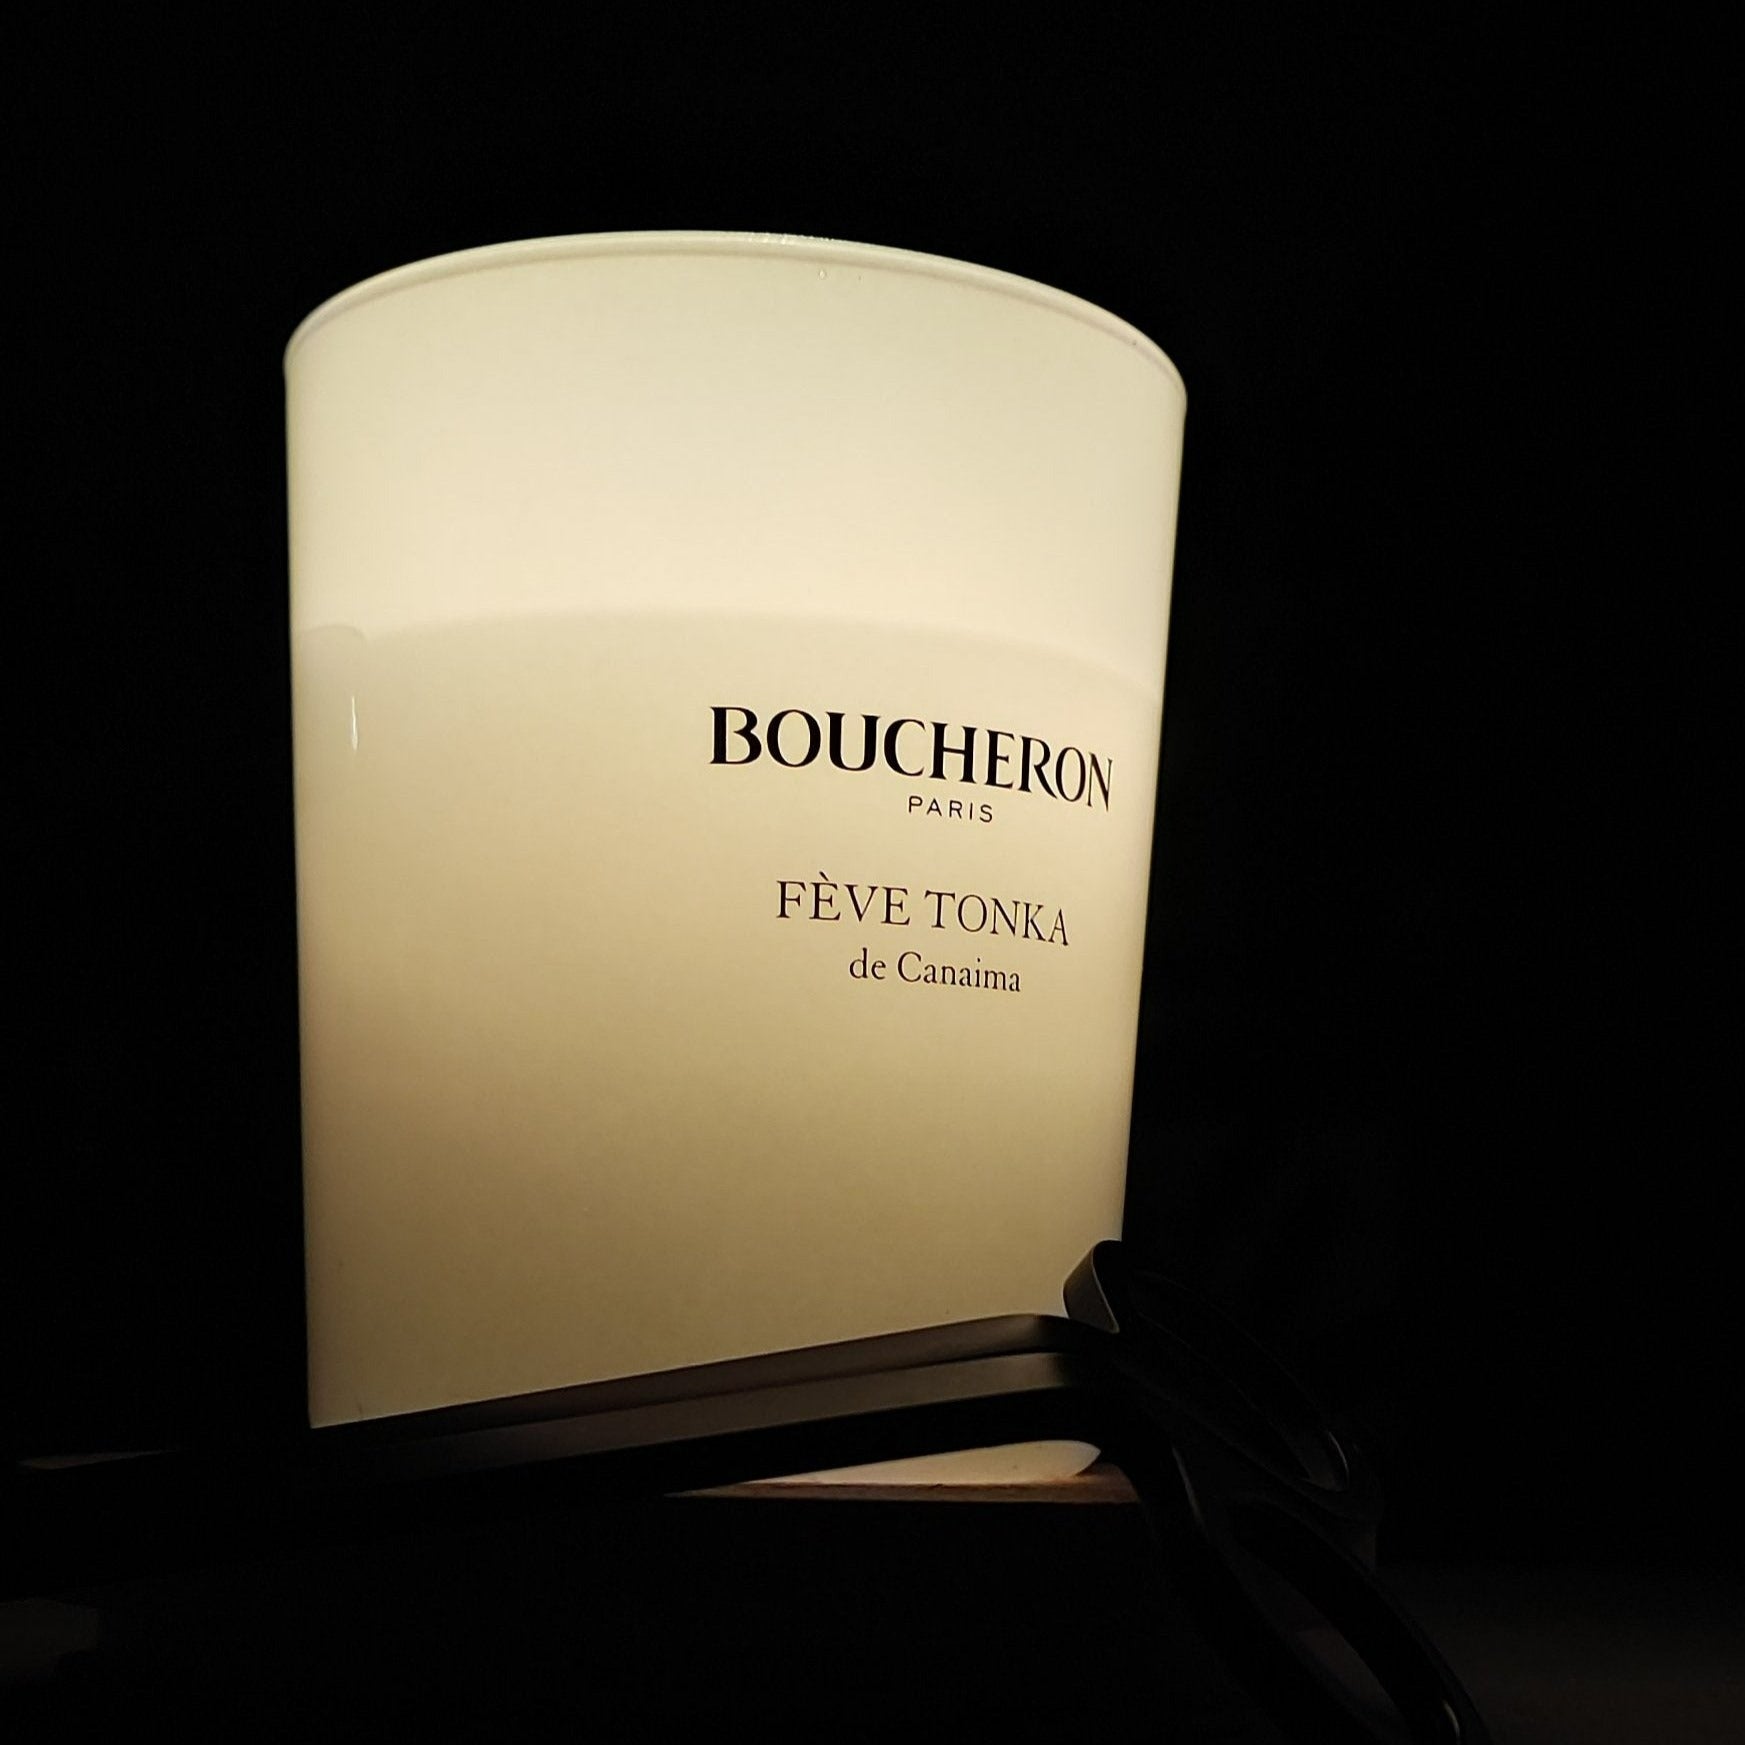 Boucheron Feve Tonka De Canaima Candle | My Perfume Shop Australia